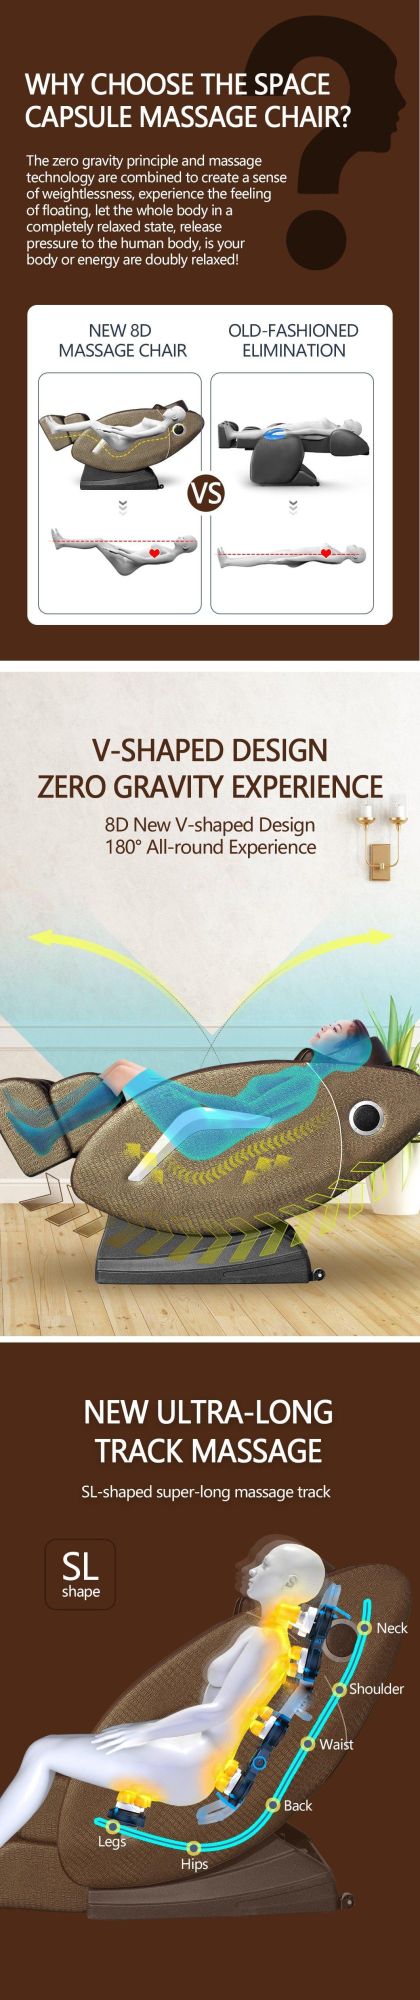 Luxury Royal Bluetooth Music Human Touch Thai Full Body Zero Gravity Massage Chair